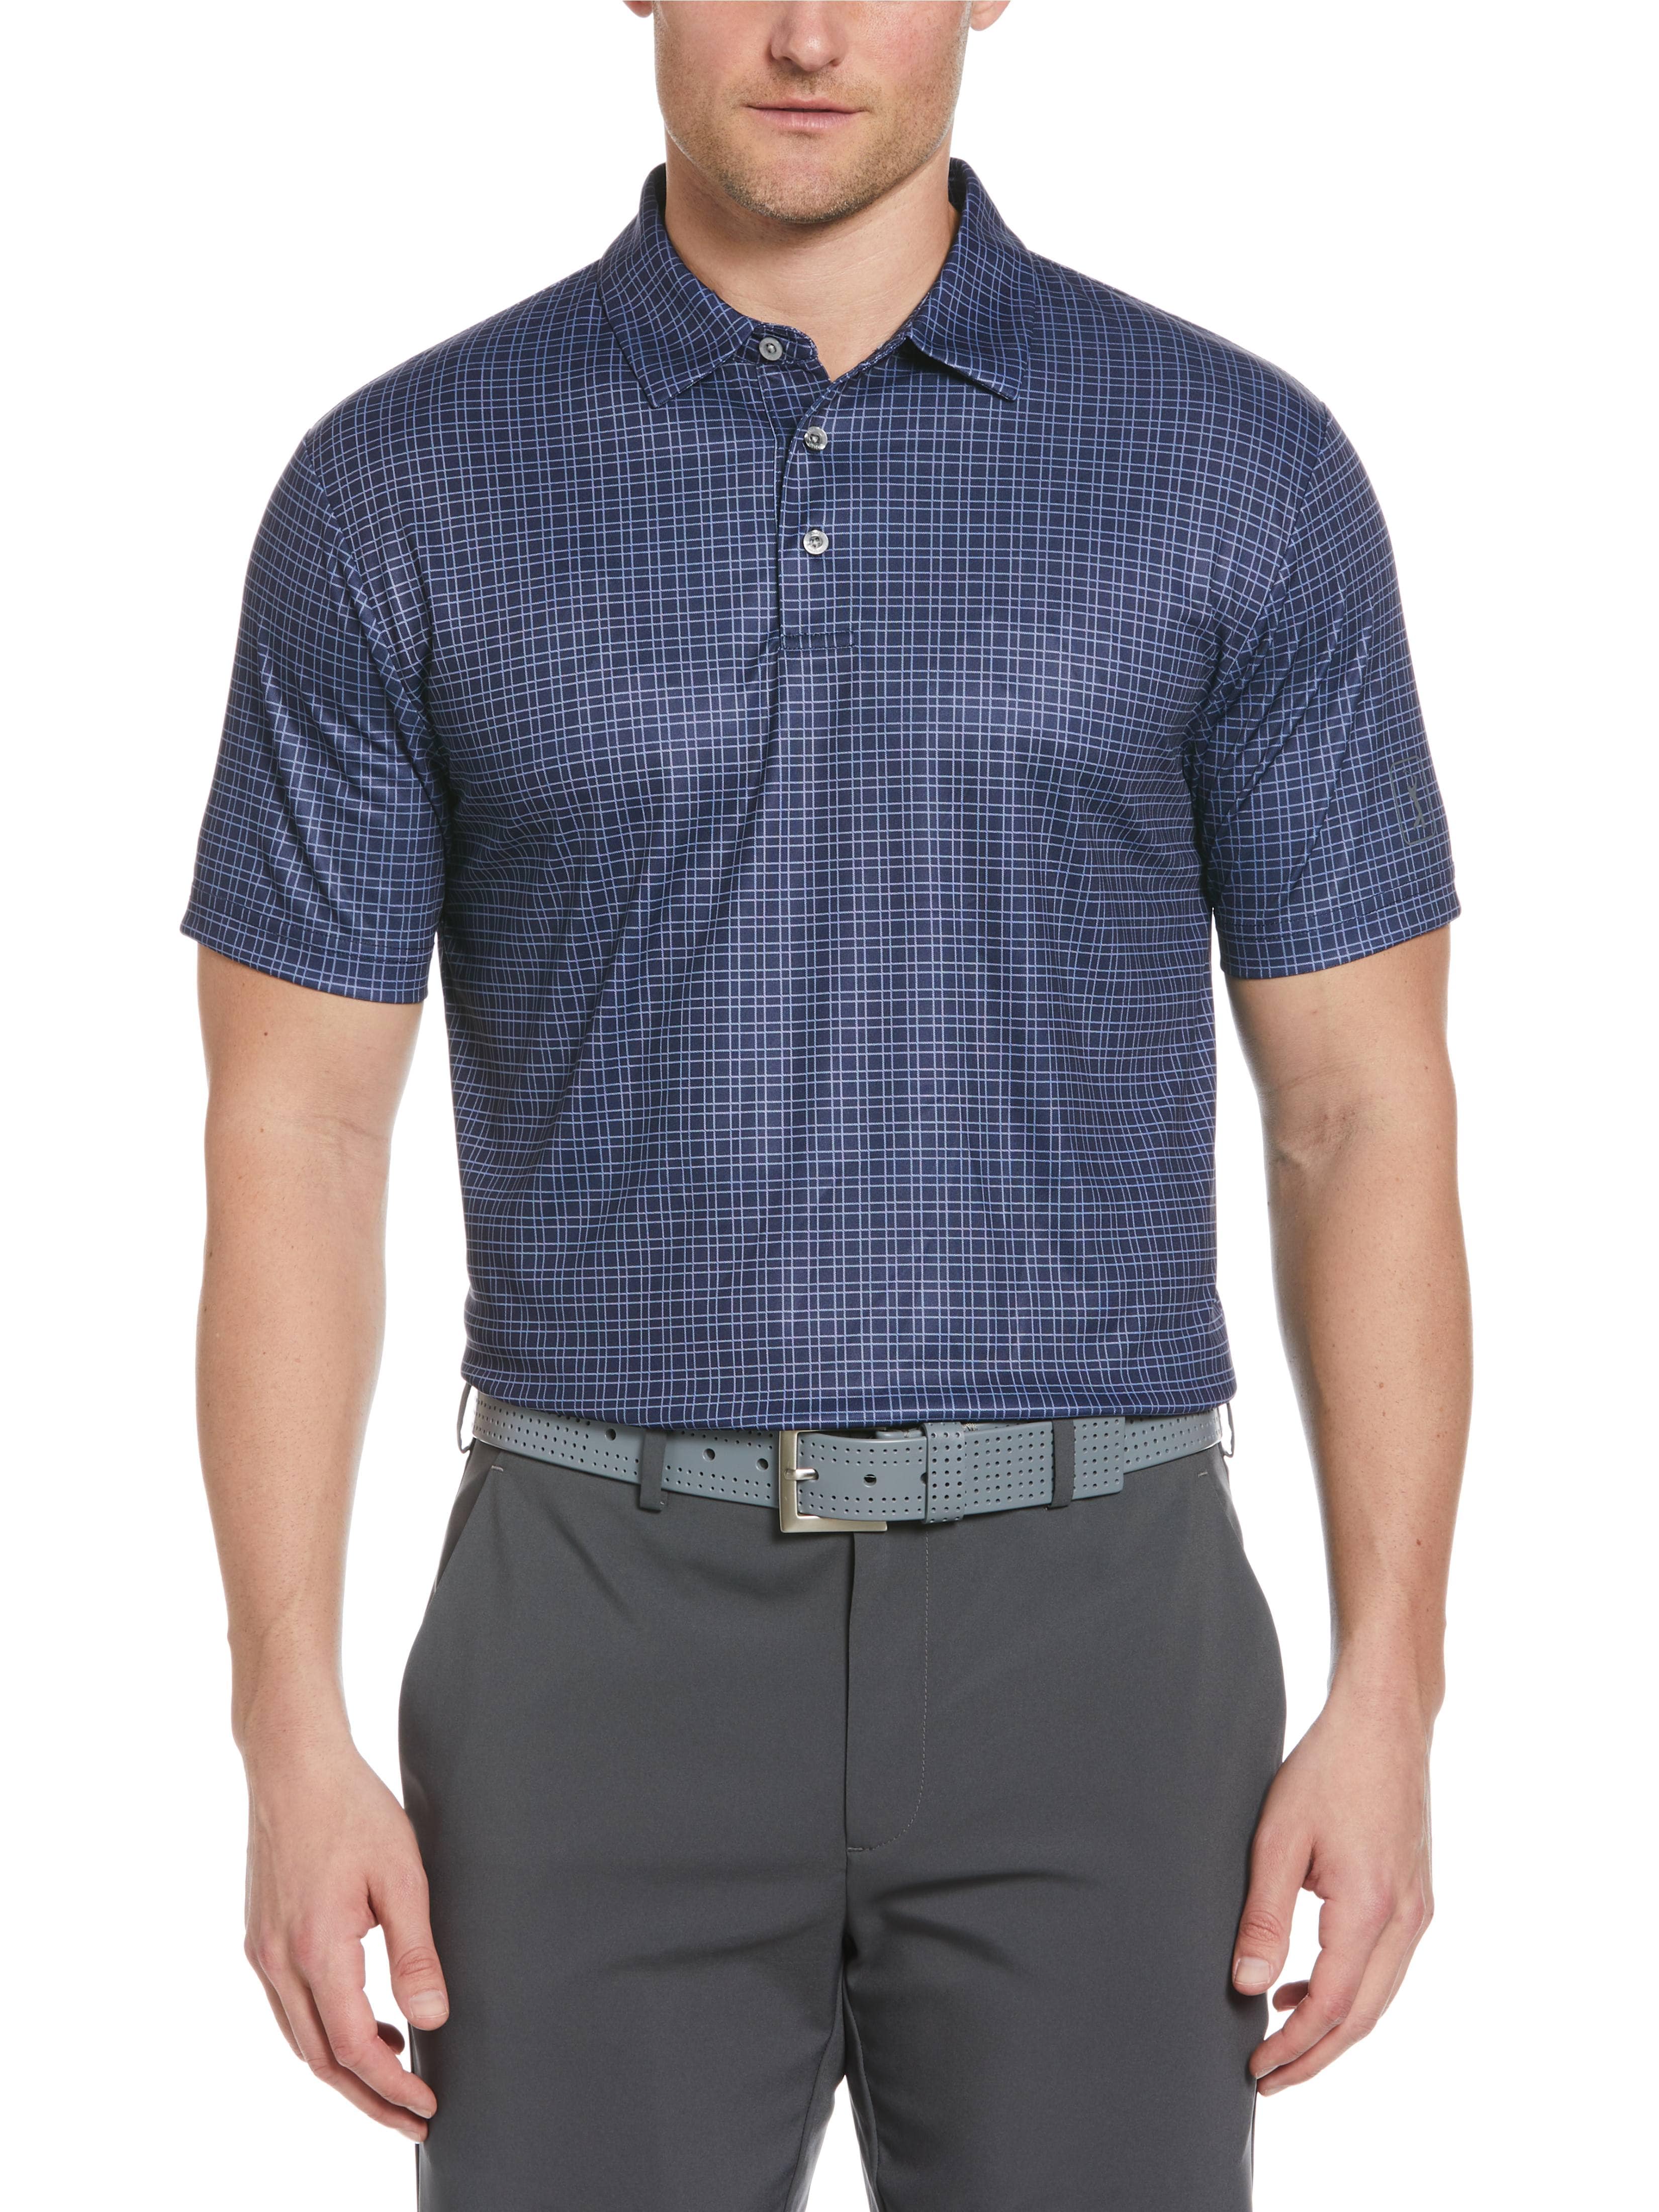 PGA TOUR Apparel Mens Menswear Print Golf Polo Shirt, Size Large, Navy Blue, 100% Polyester | Golf Apparel Shop